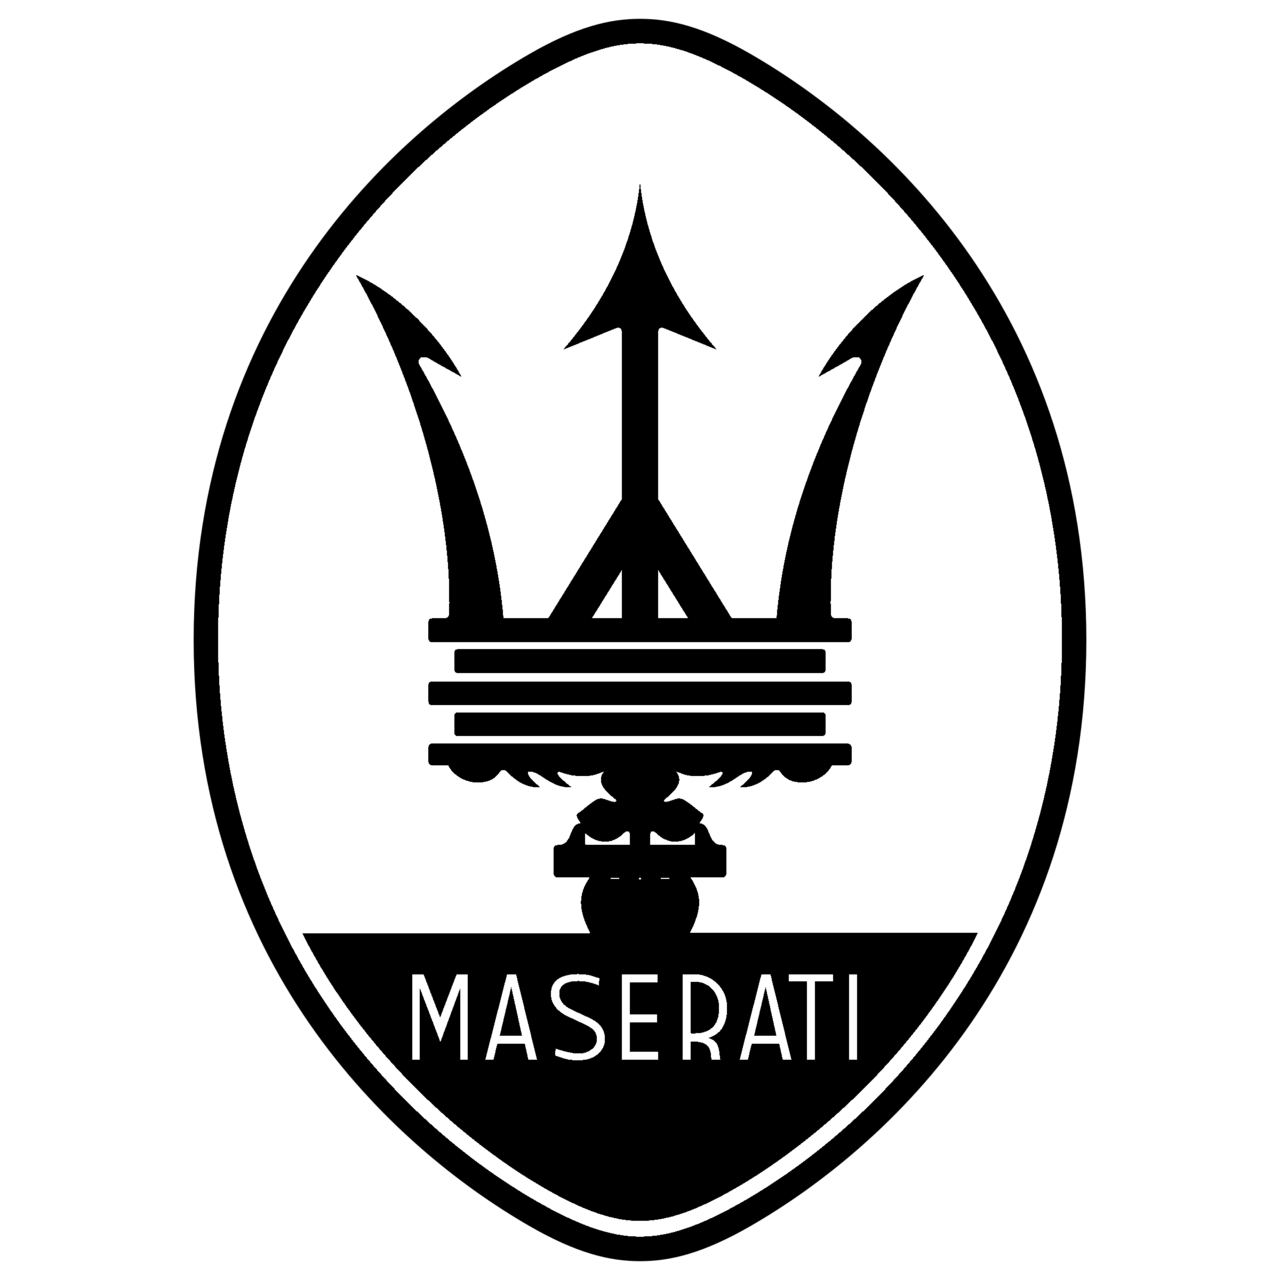 maserati-logo-black-and-white